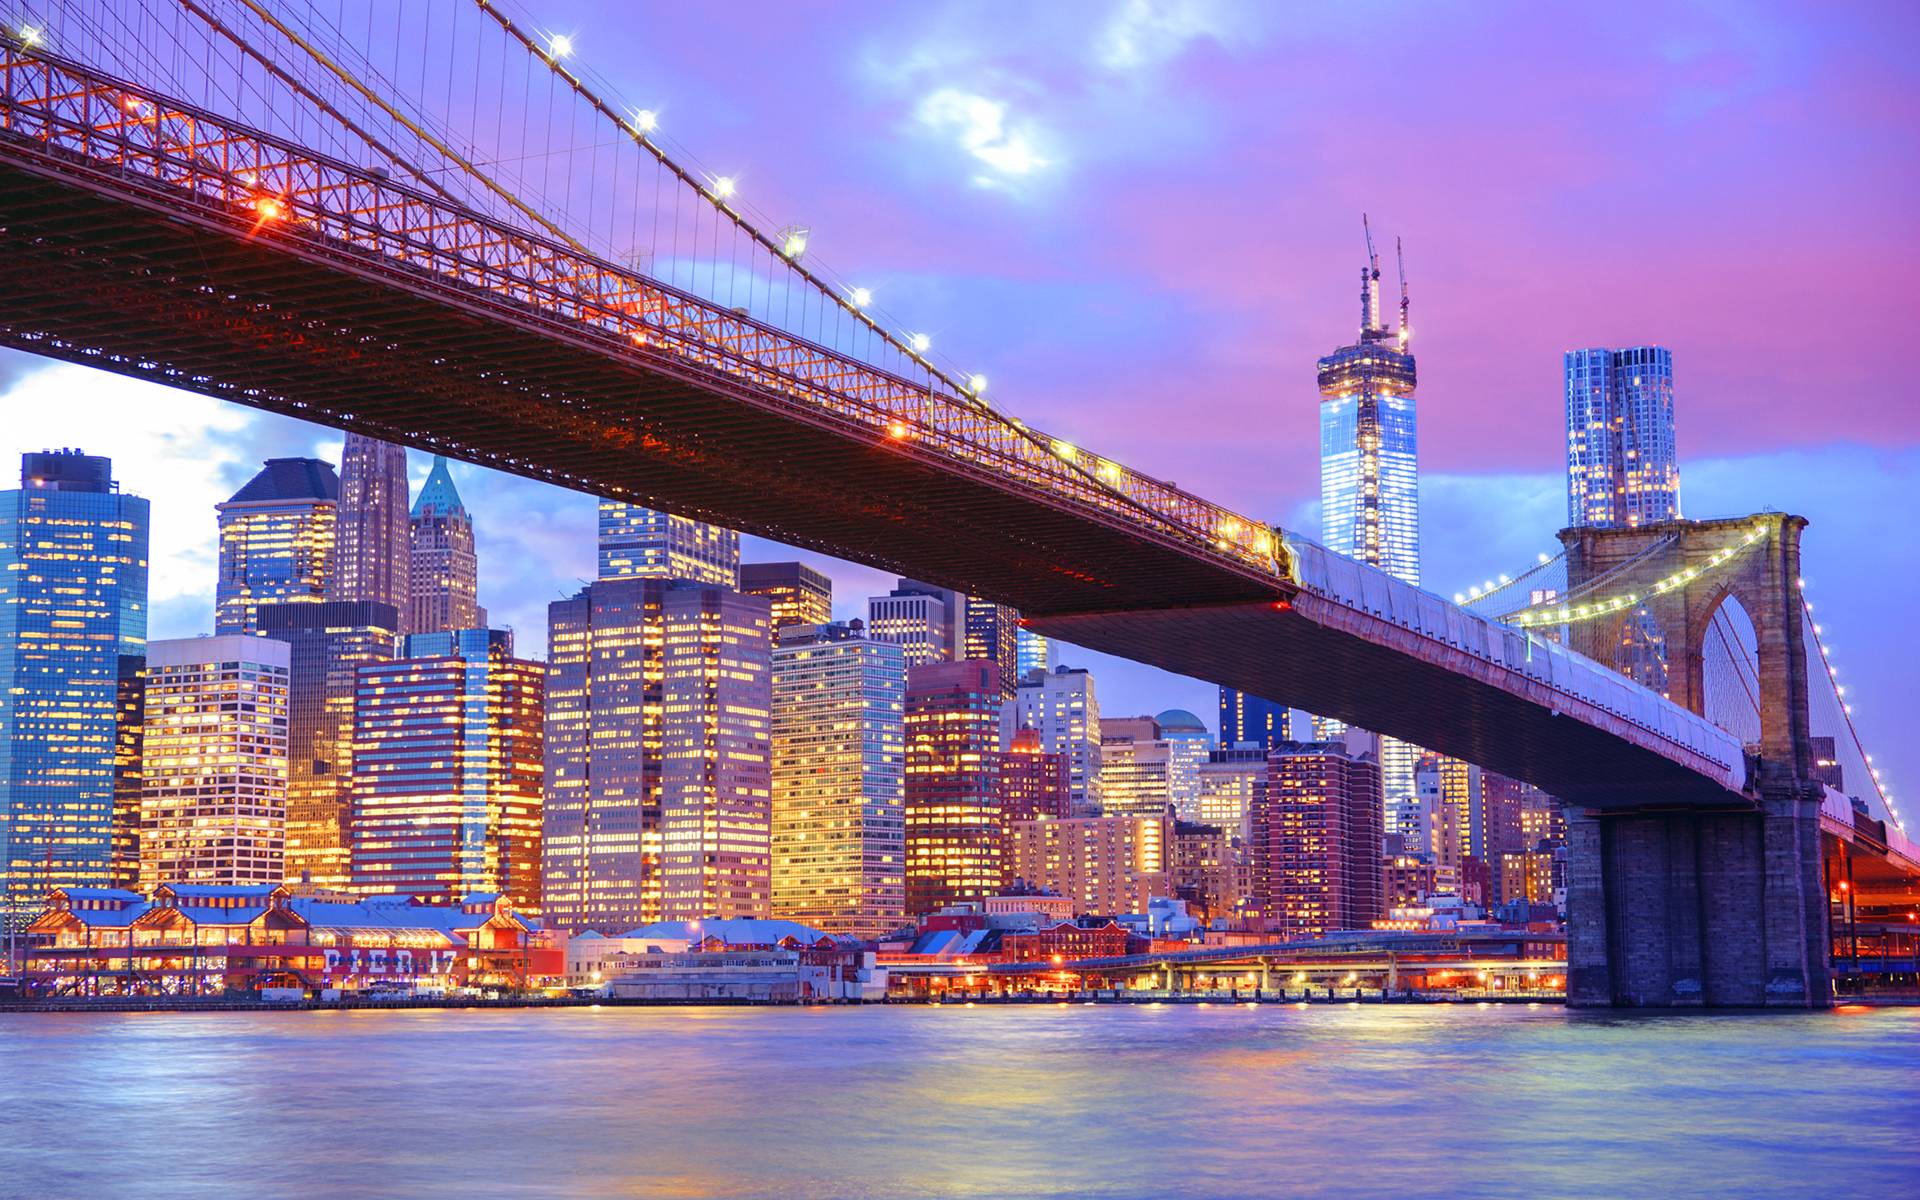 Brooklyn Bridge City Lights Wallpaper Picture Photo Image